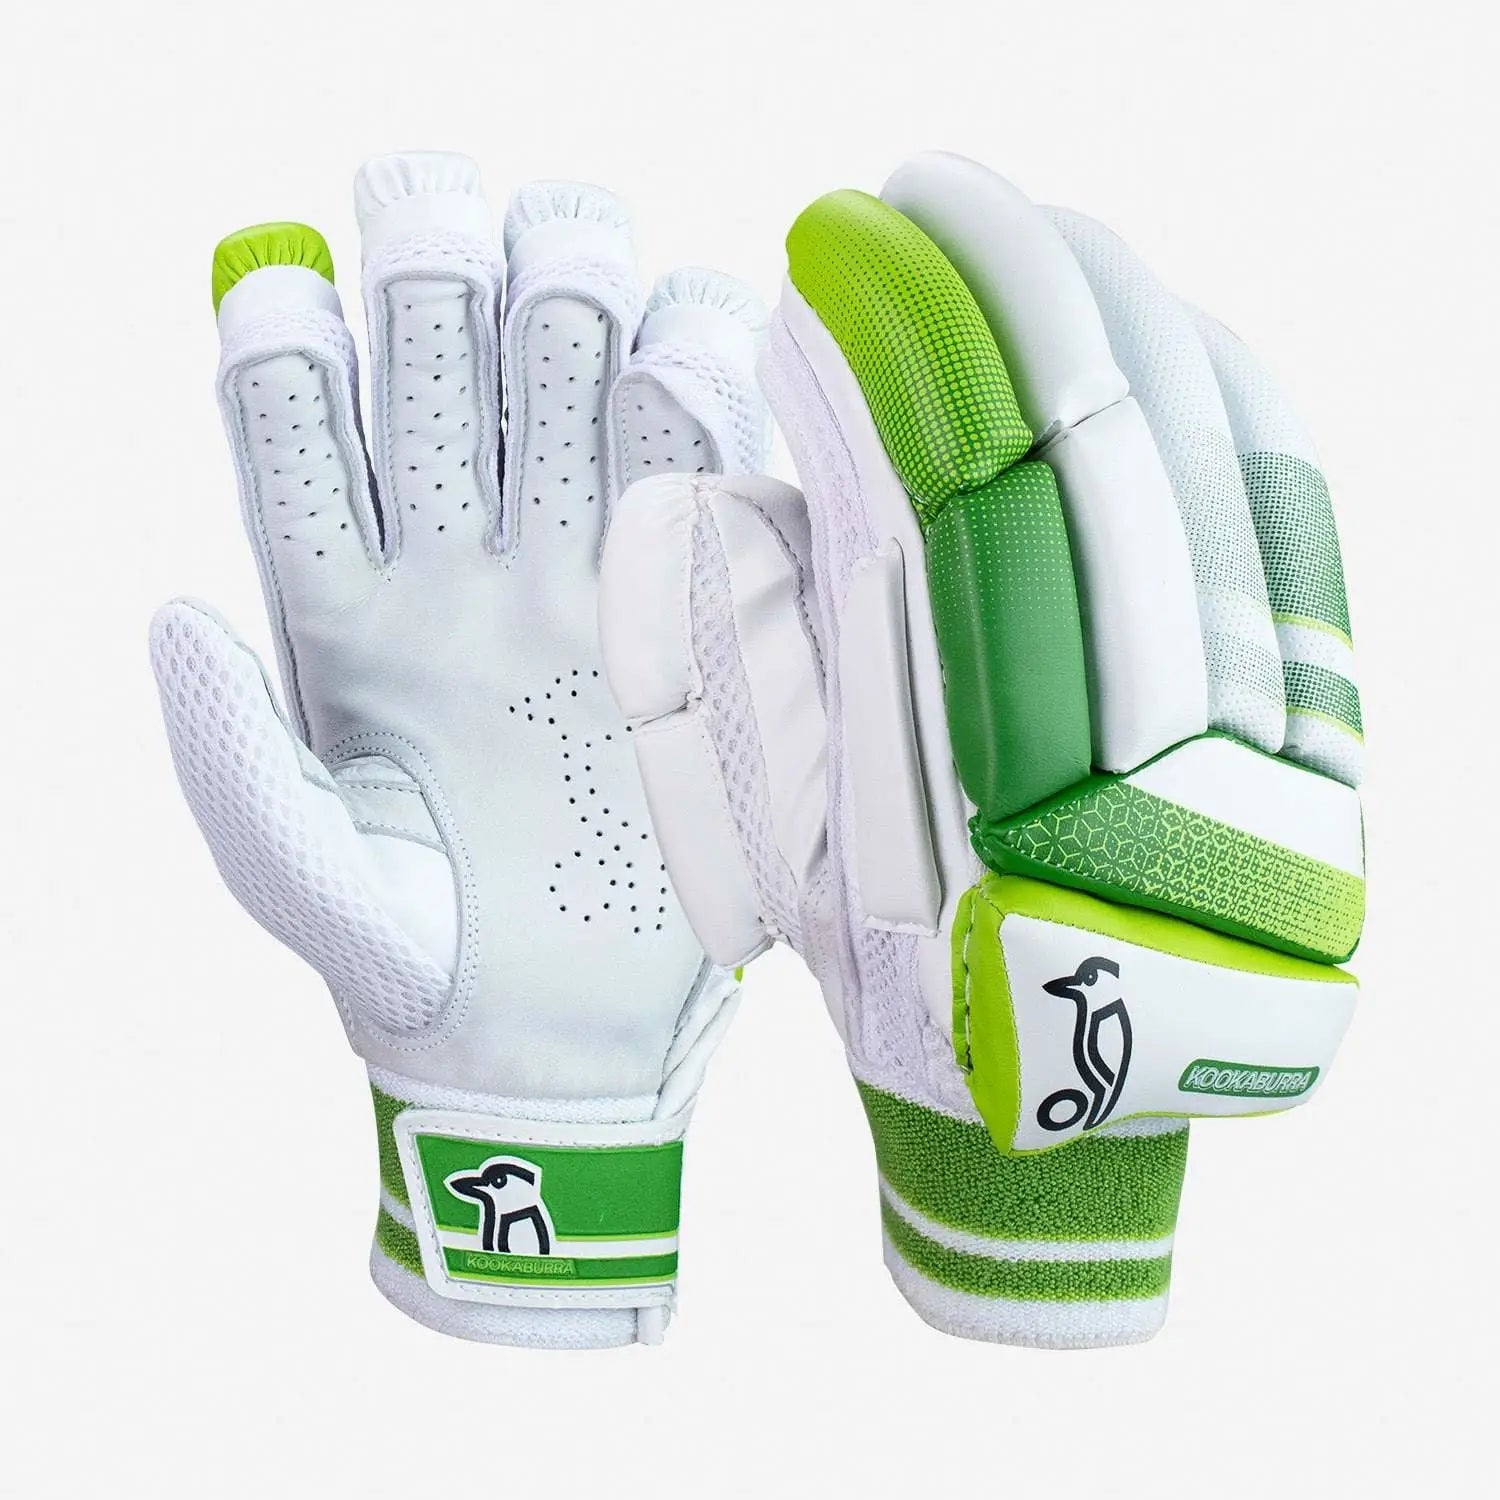 Kookaburra Kahuna 4.1 Cricket Batting Gloves Comfort and Protection - Adult LH - GLOVE - BATTING